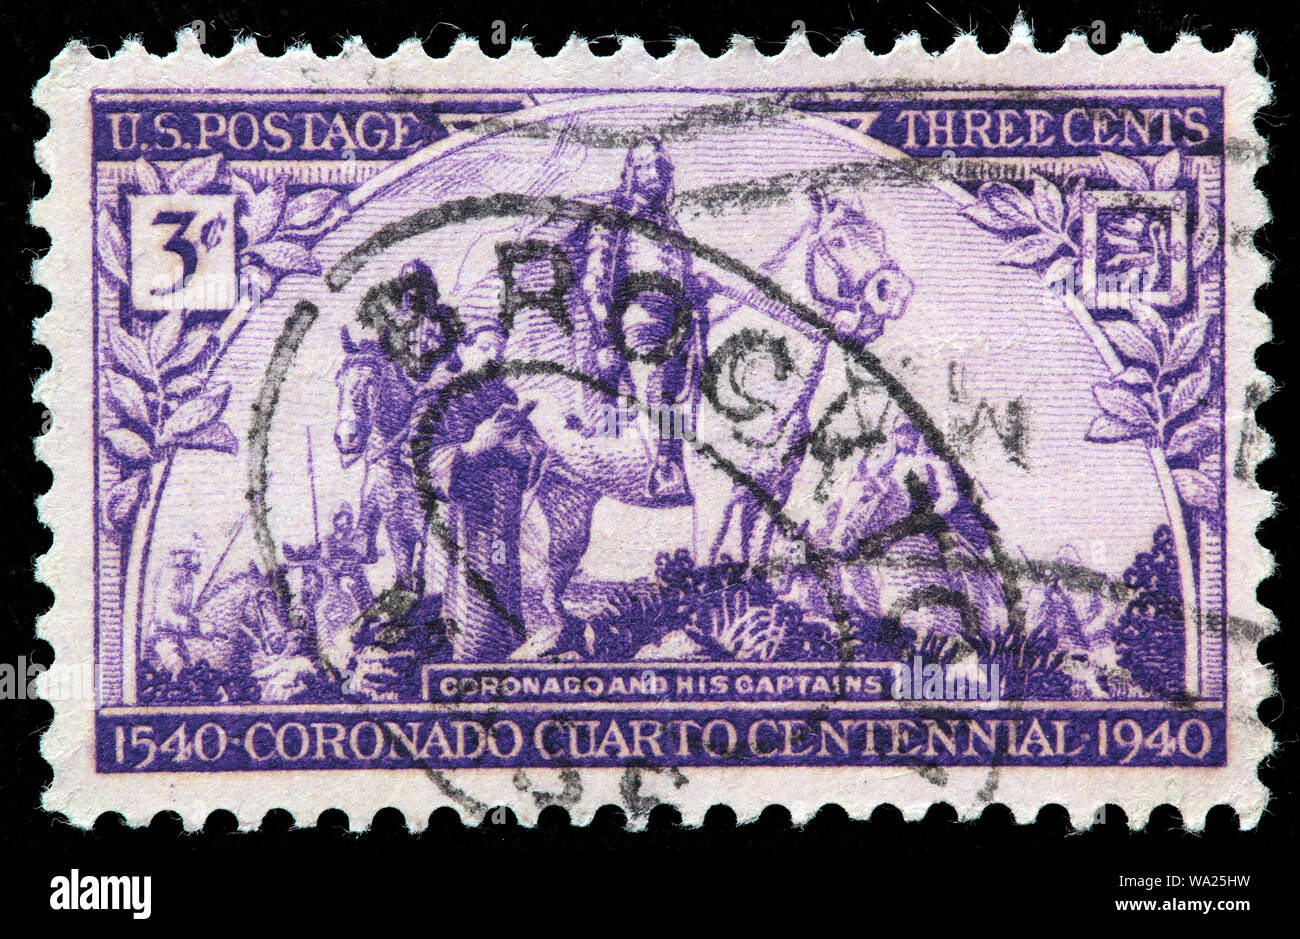 Coronado and His Captains, postage stamp, USA, 1940 Stock Photo